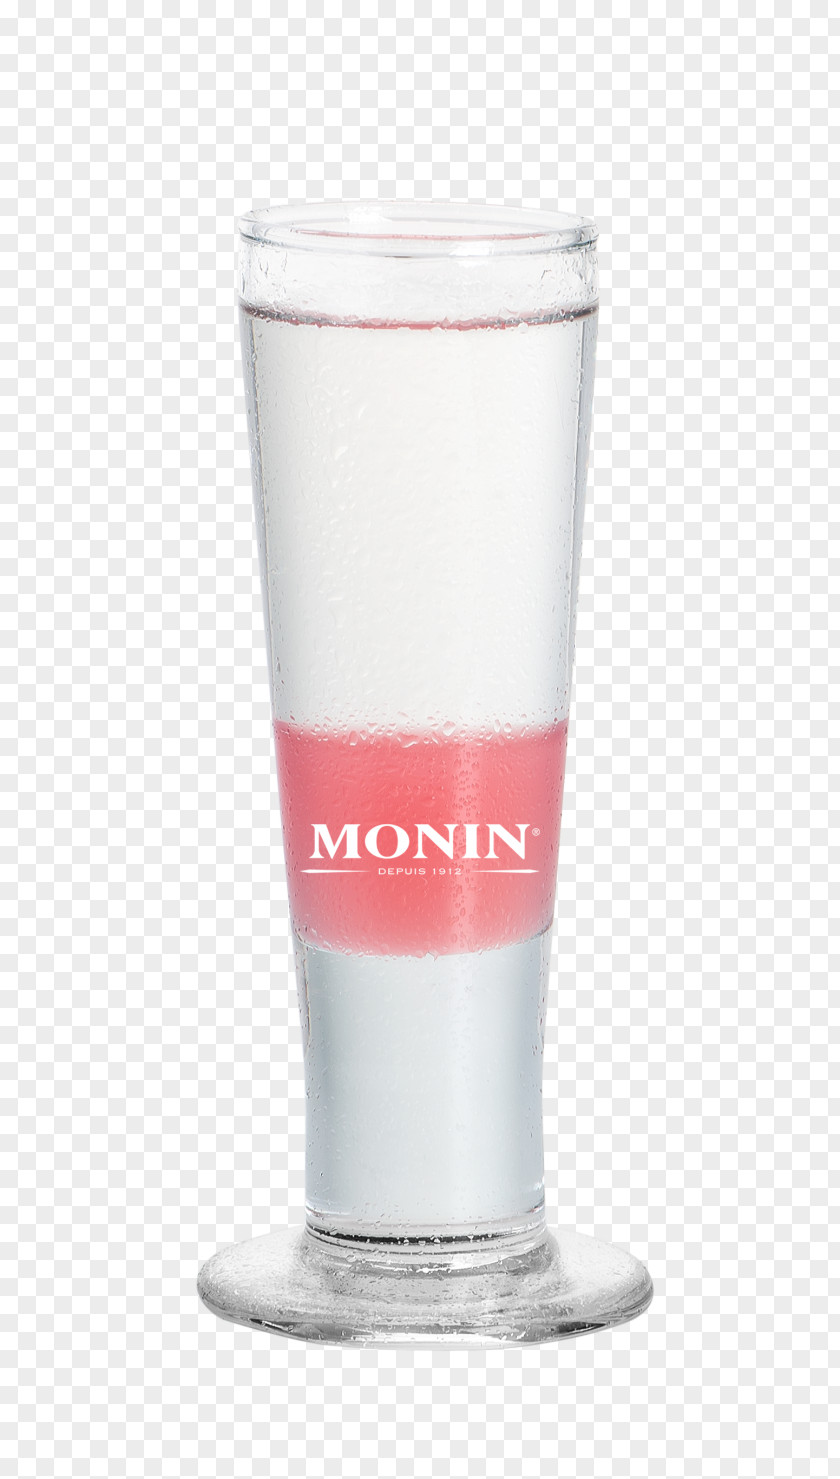 Drink Pint Glass Monin, Inc. Syrup PNG